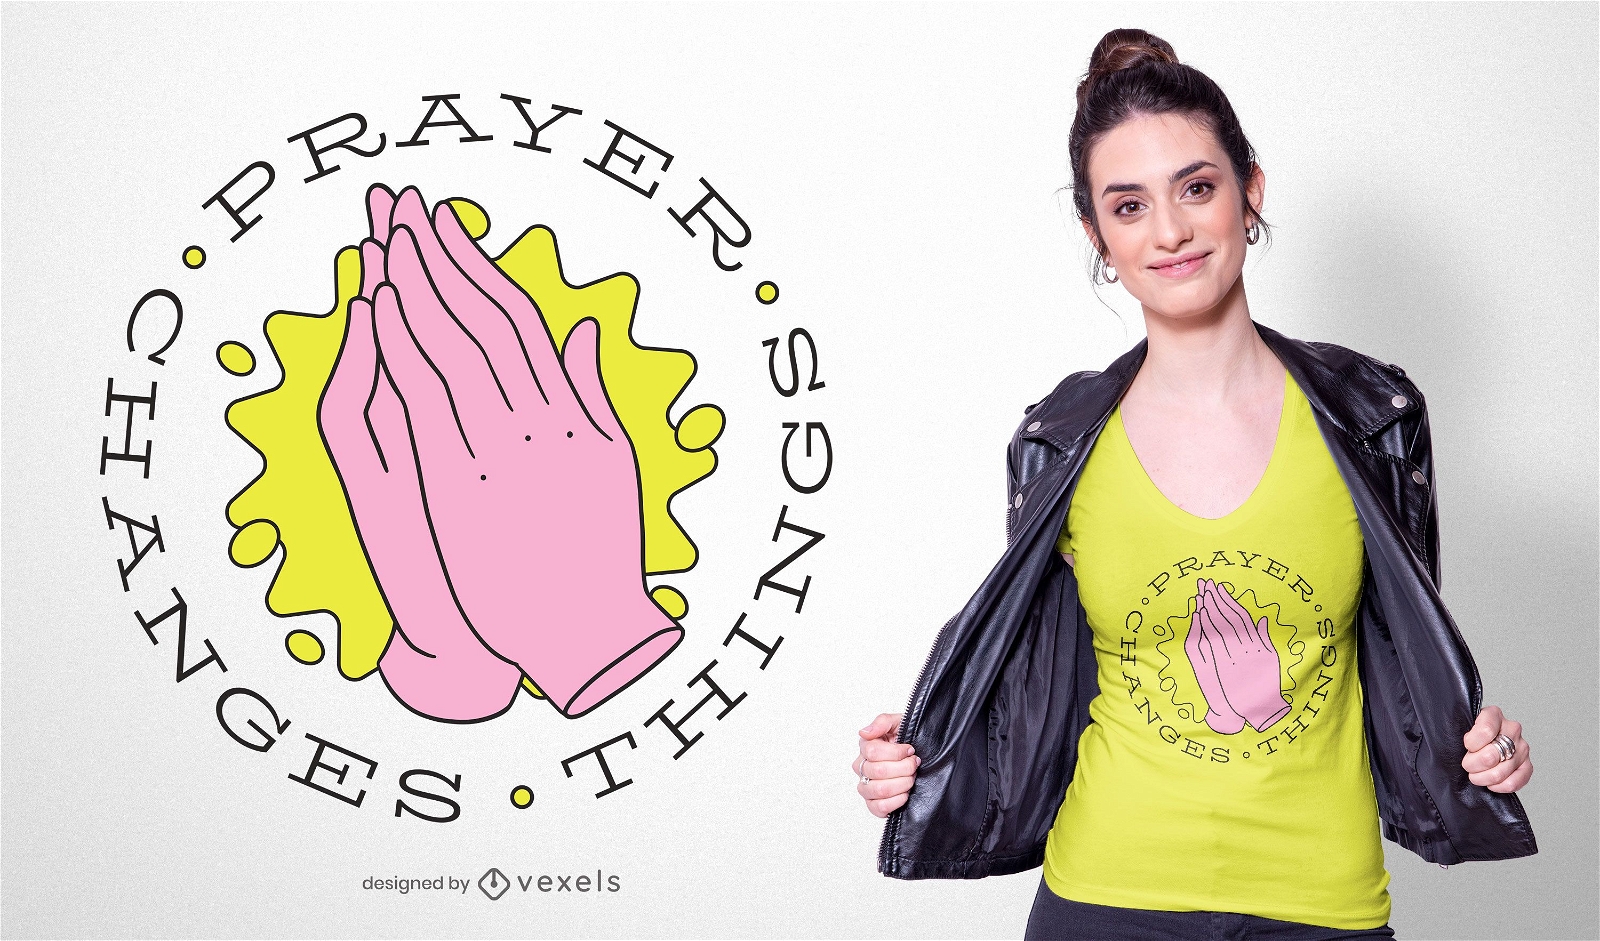 Prayer changes things t-shirt design